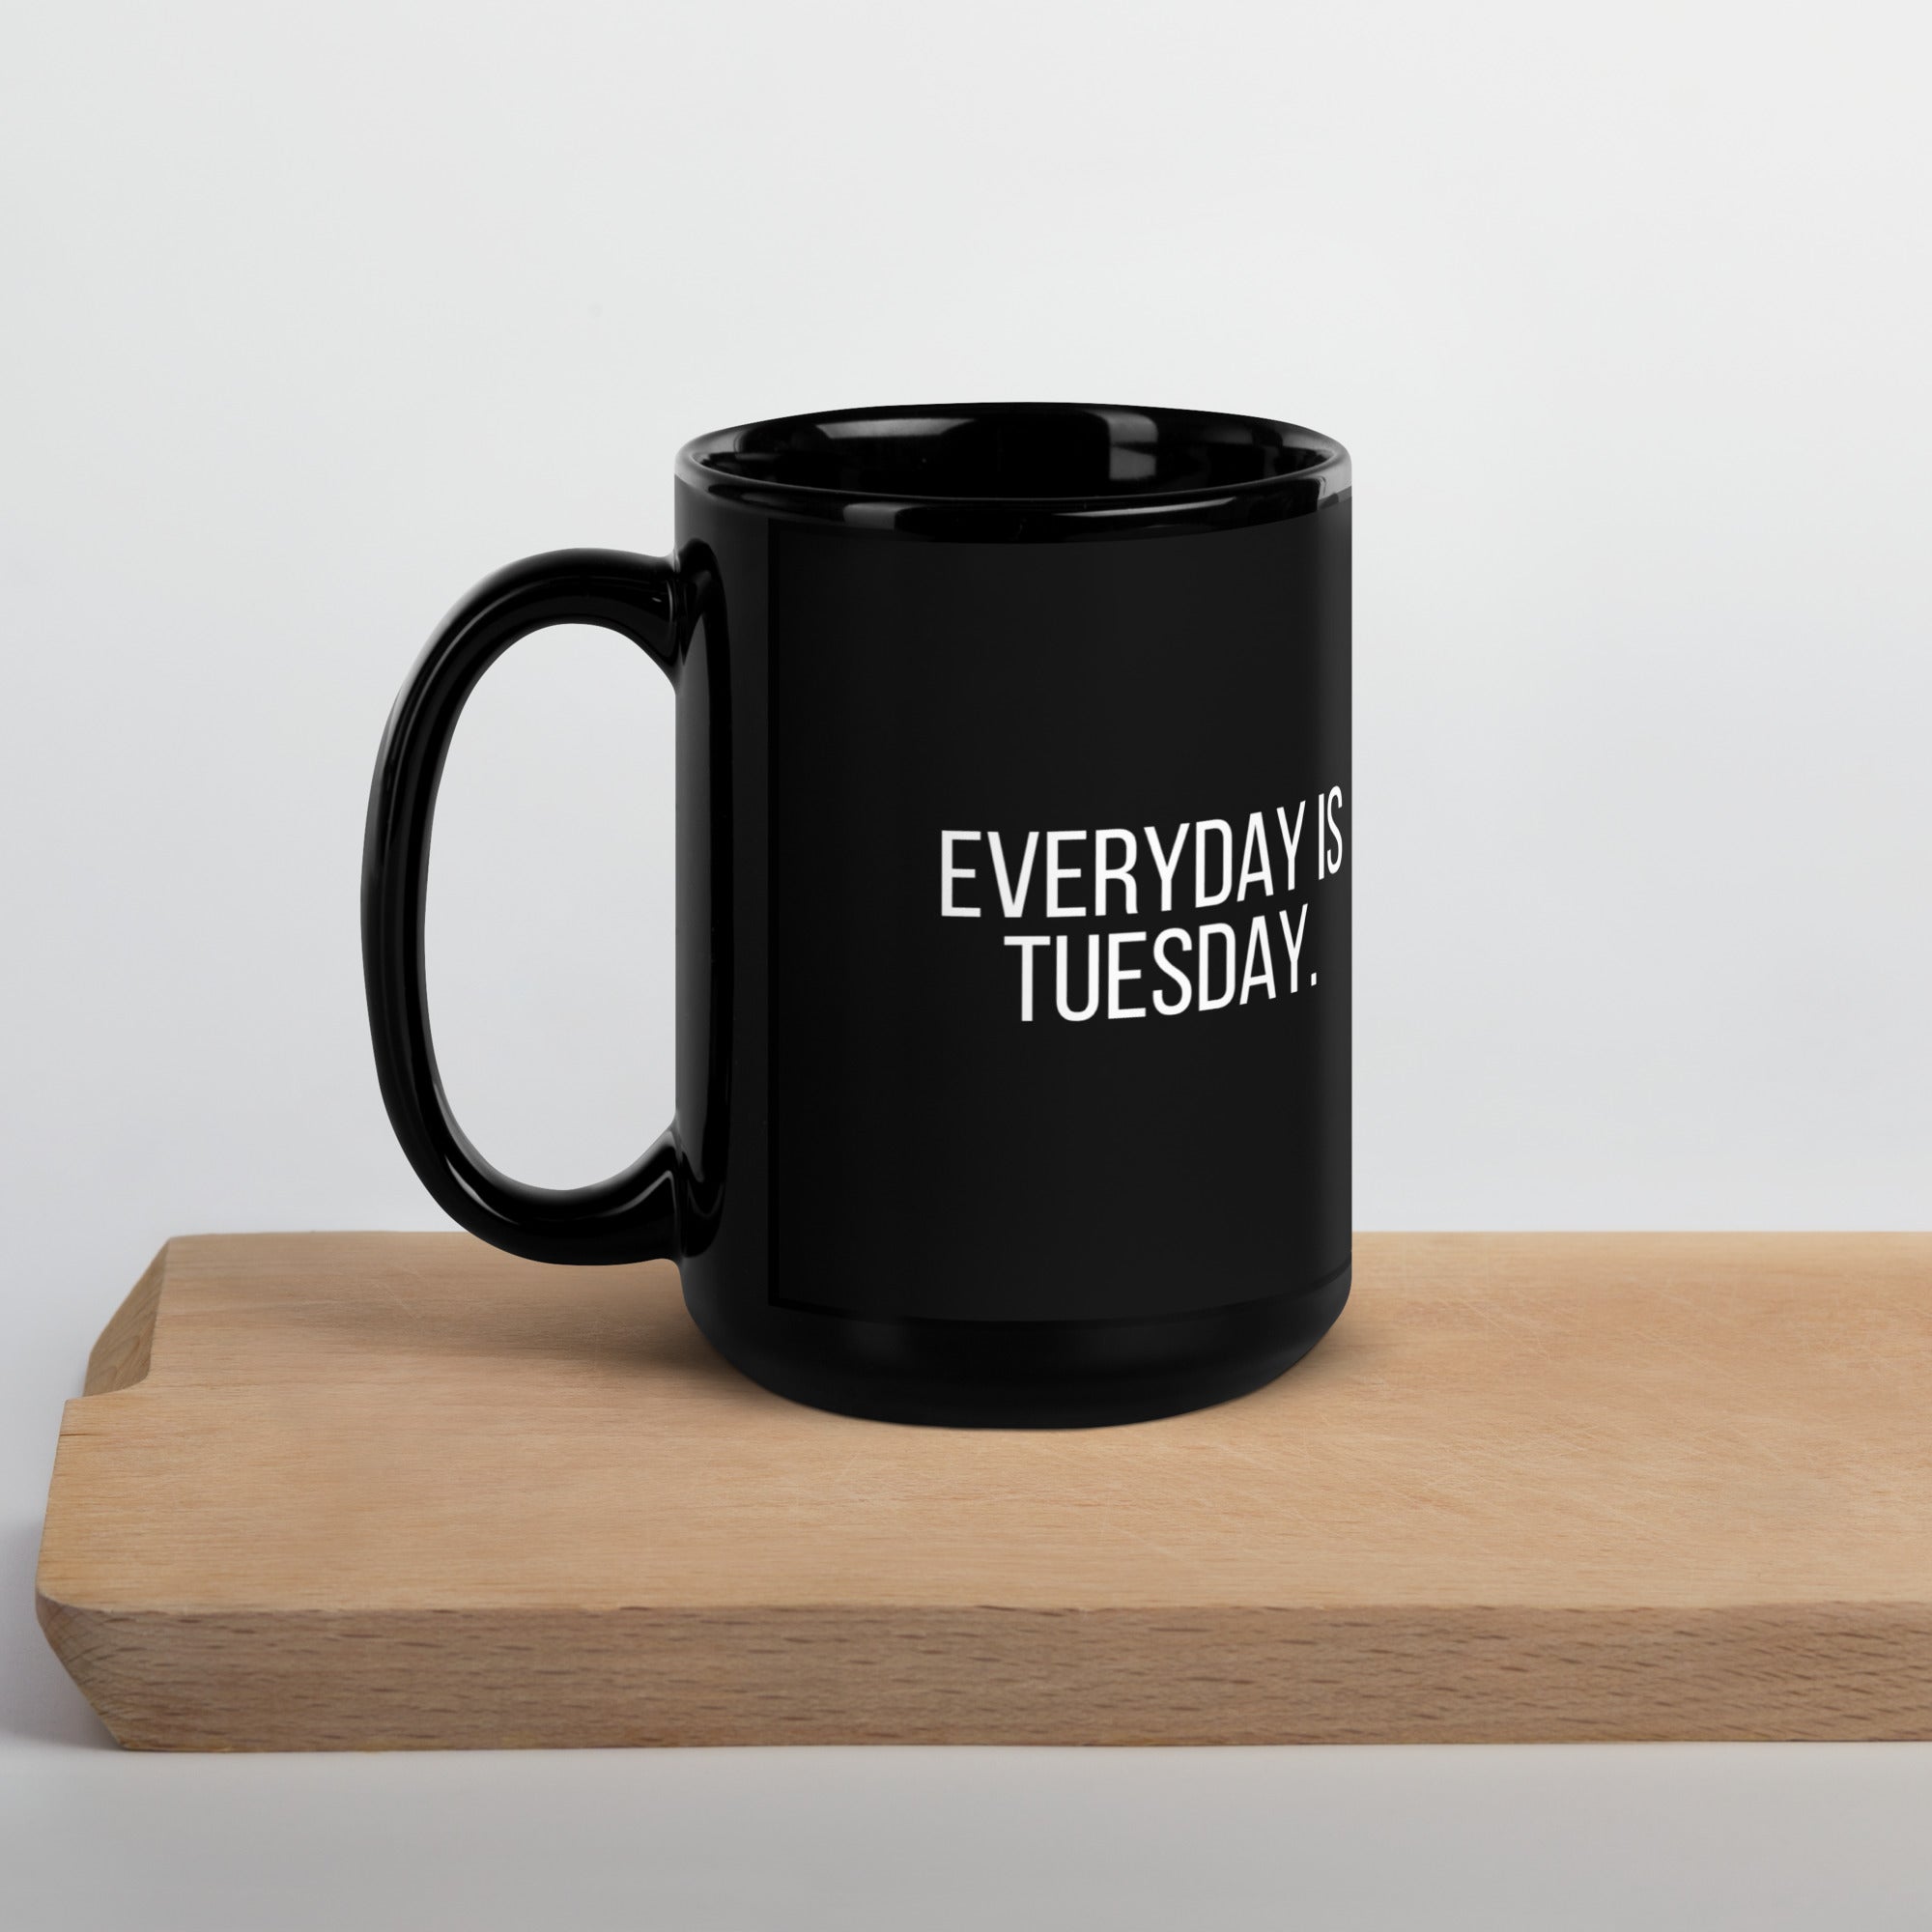 Everyday is Tuesday Mug